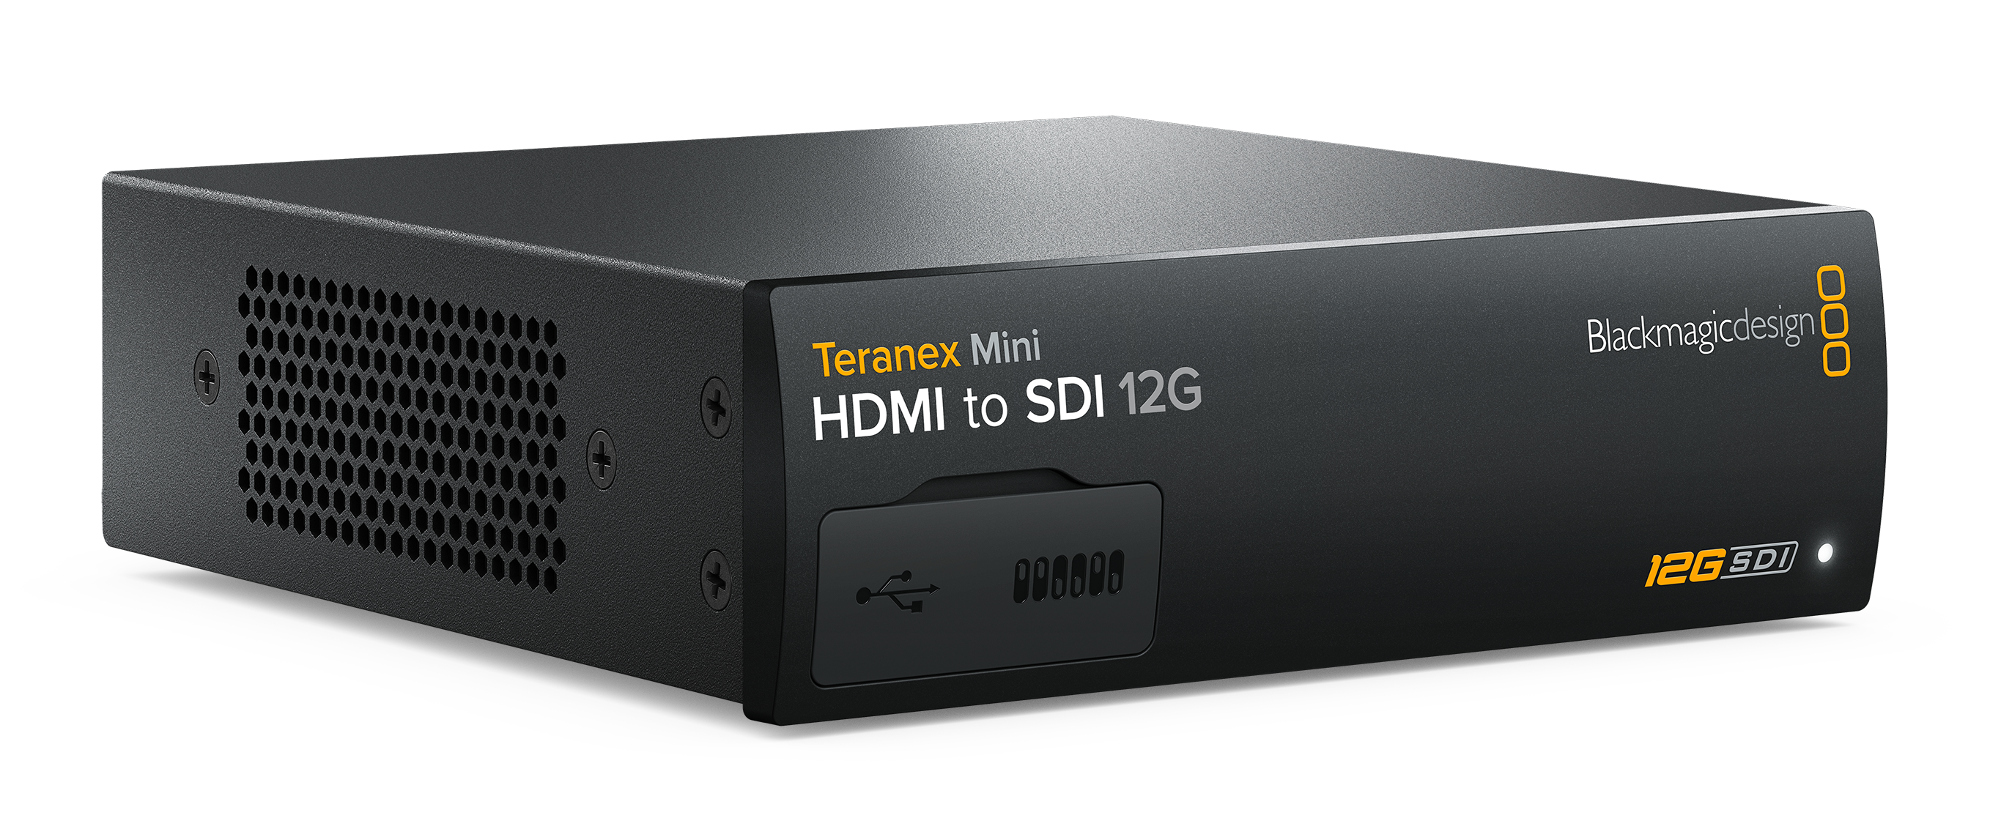 NEW SEALED 9338716003482 HDMI to SDI 12G Blackmagic Design Blackmagic Design Teranex Mini 